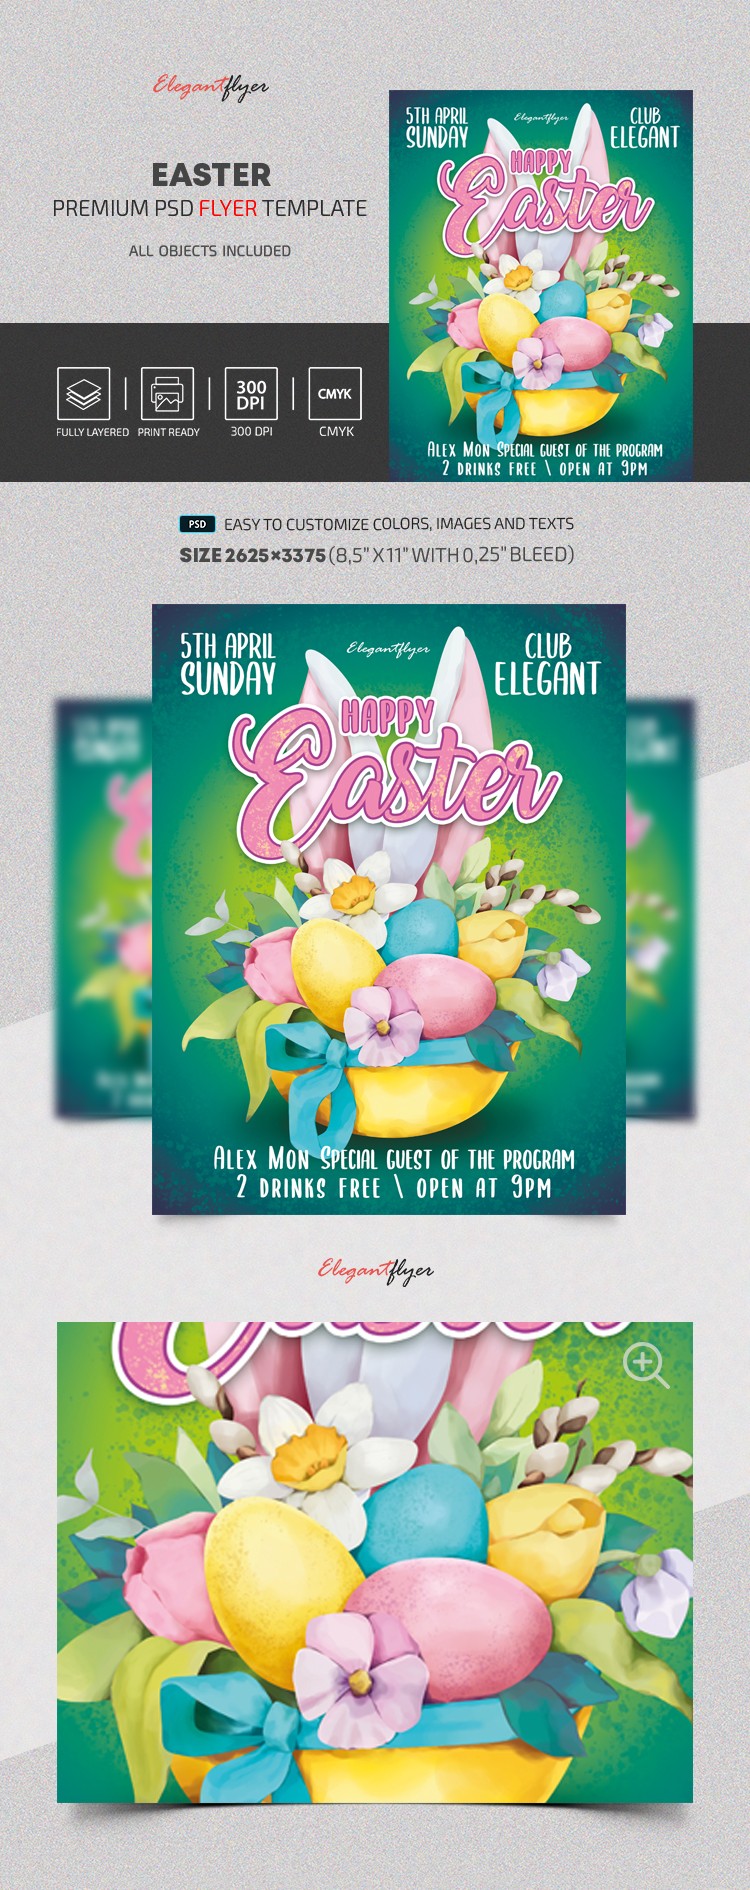 Easter Flyer by ElegantFlyer